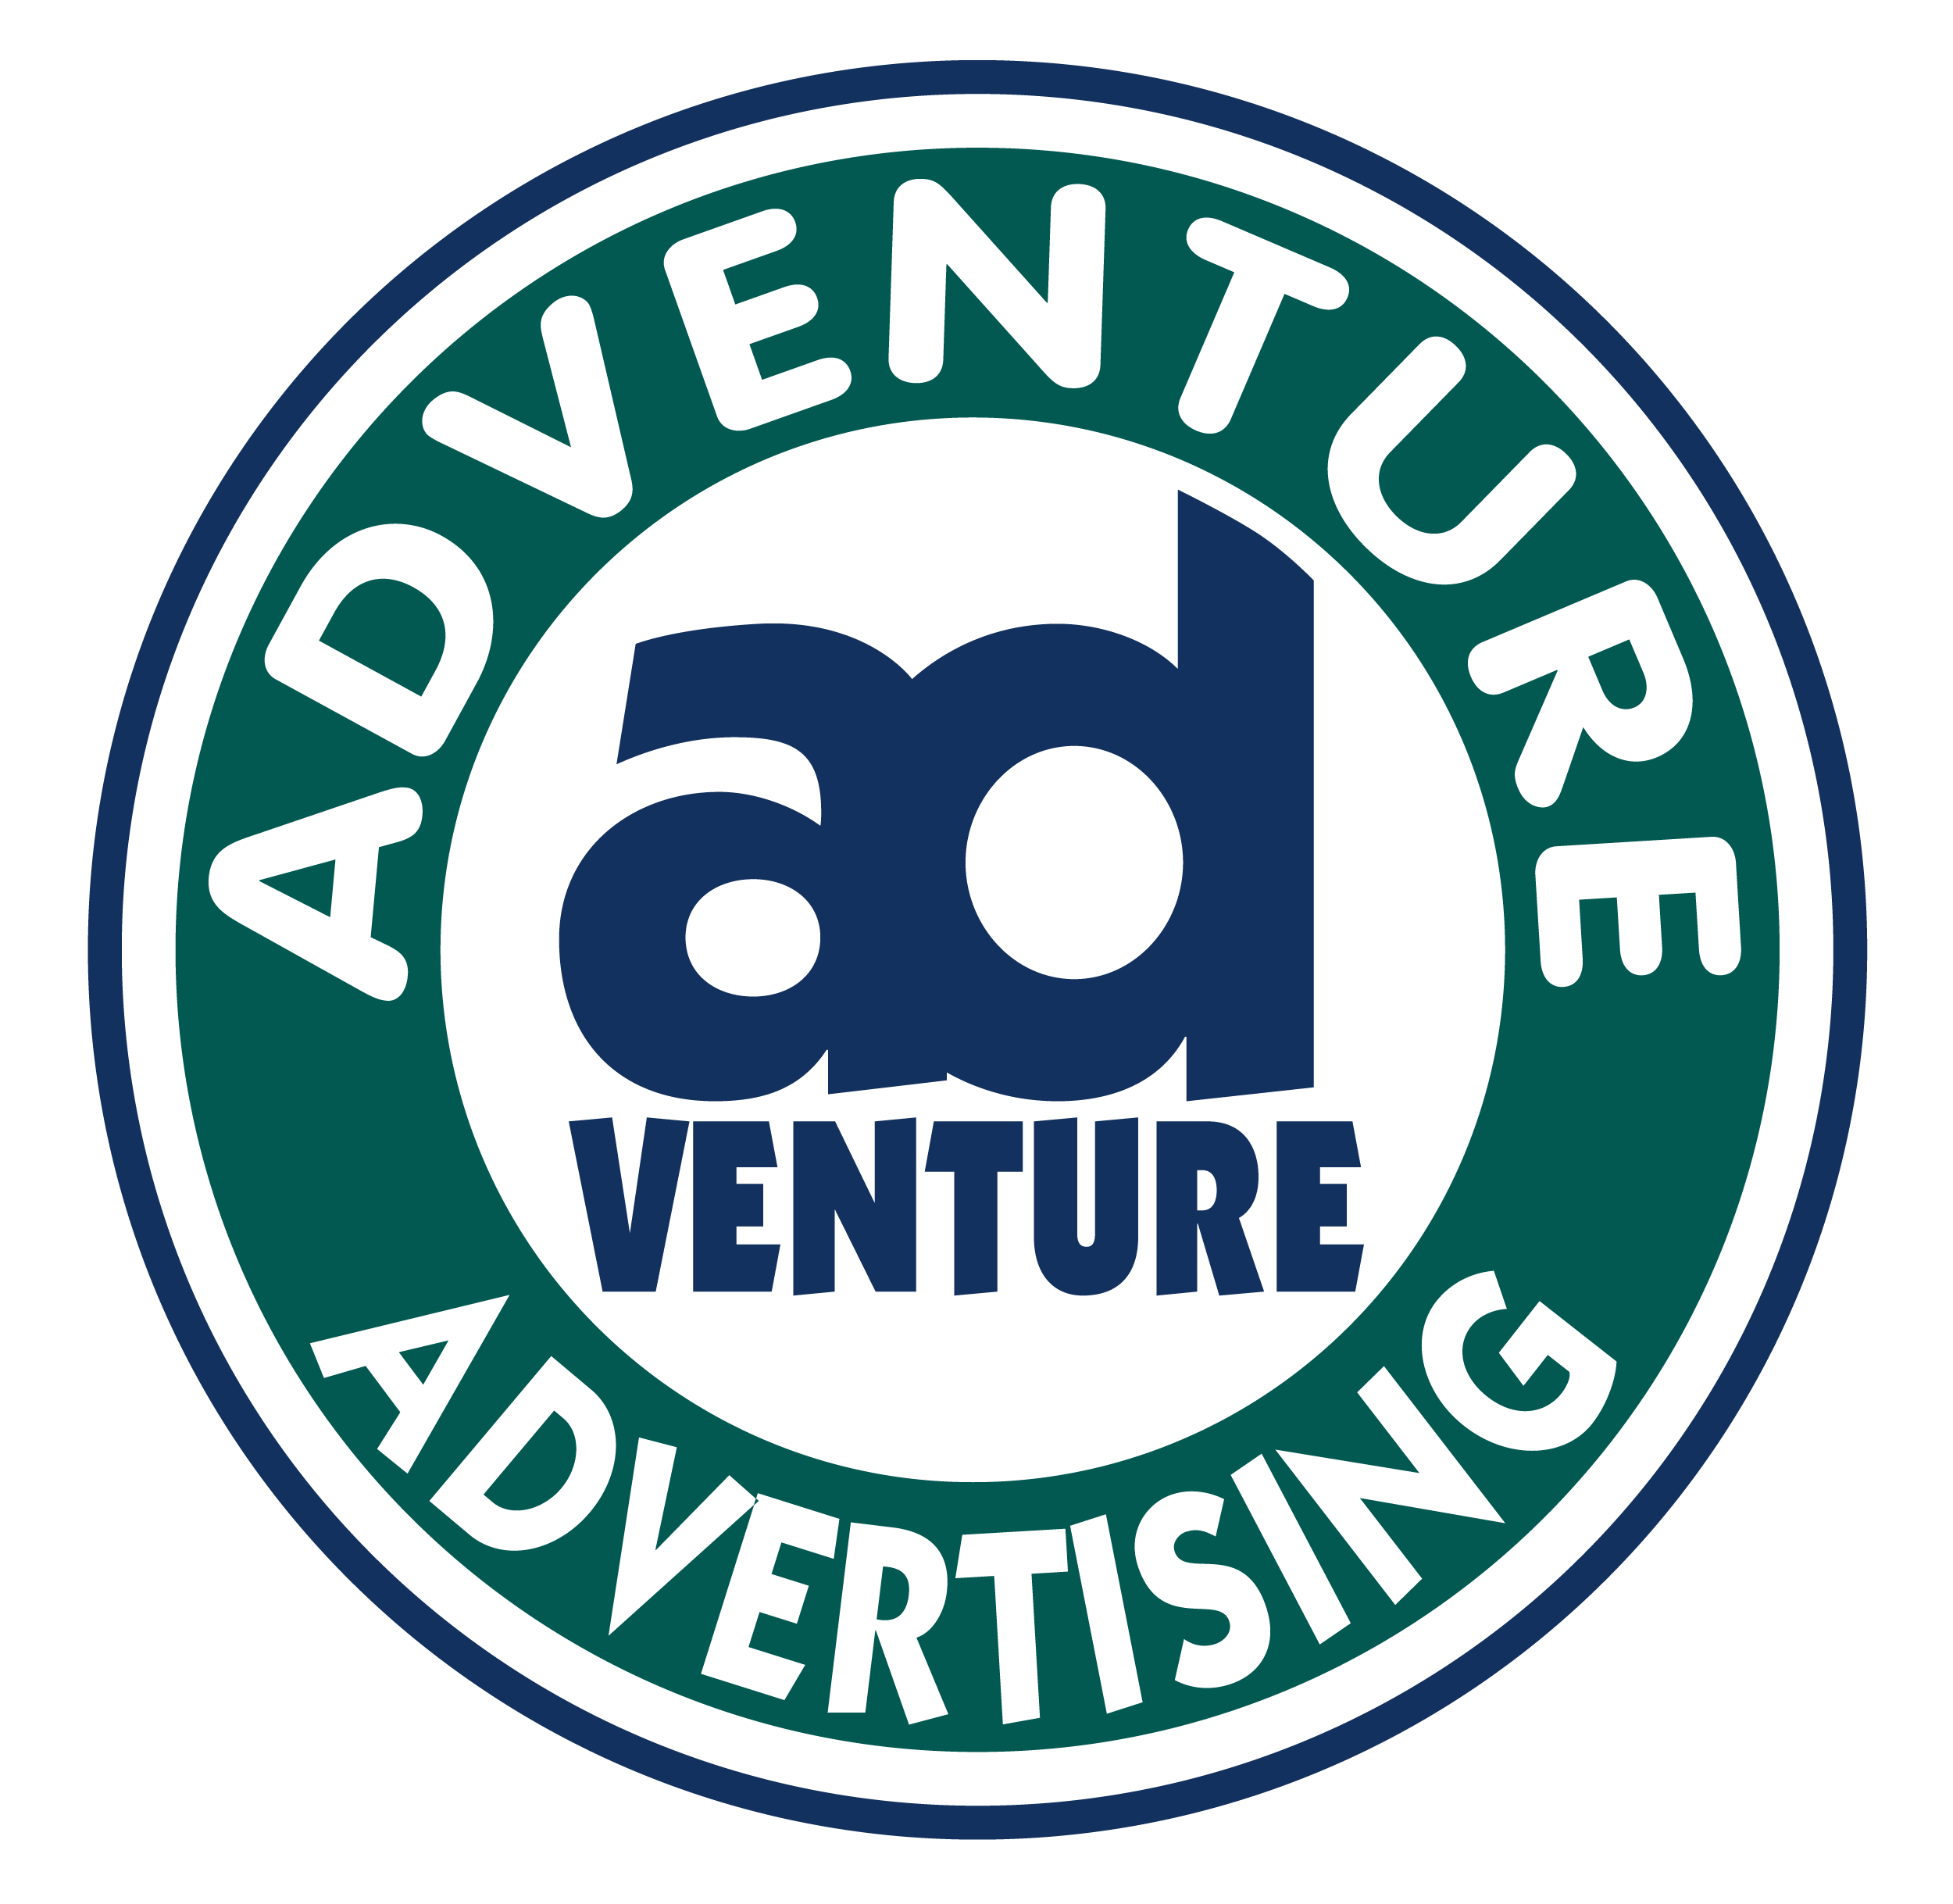 Adventure Advertising